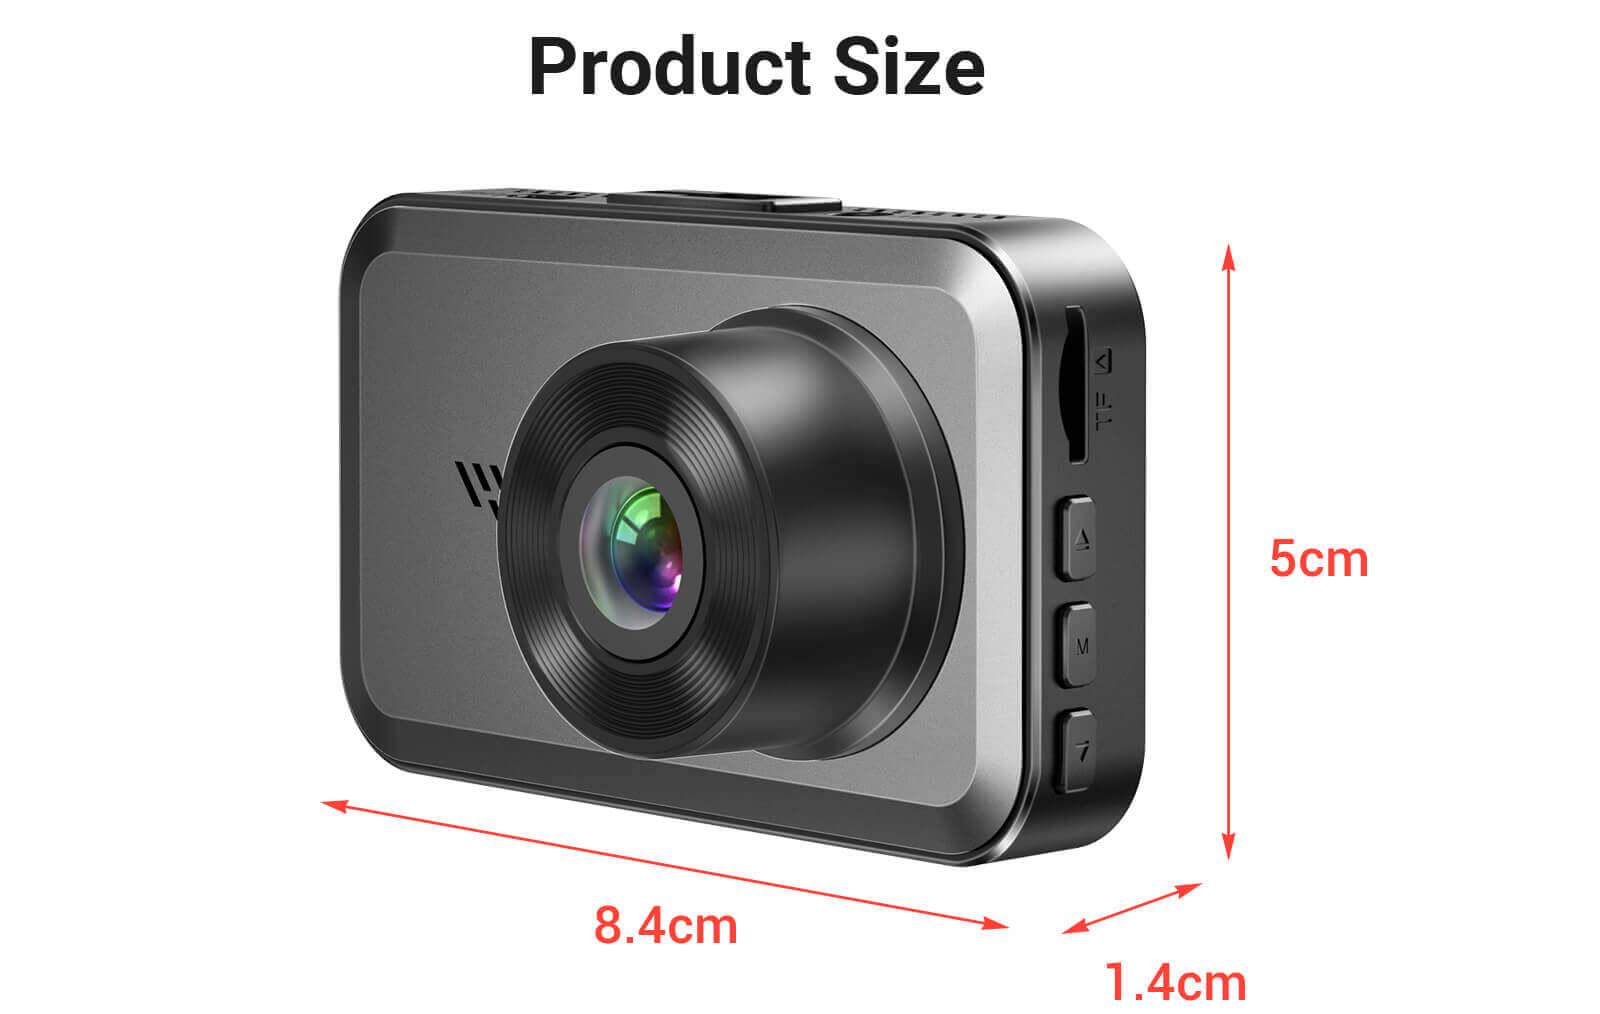 XGODY 4K Dashcam Dual Lens Kamera Auto Rückfahrkamera WIFI & APP  Videorecorder